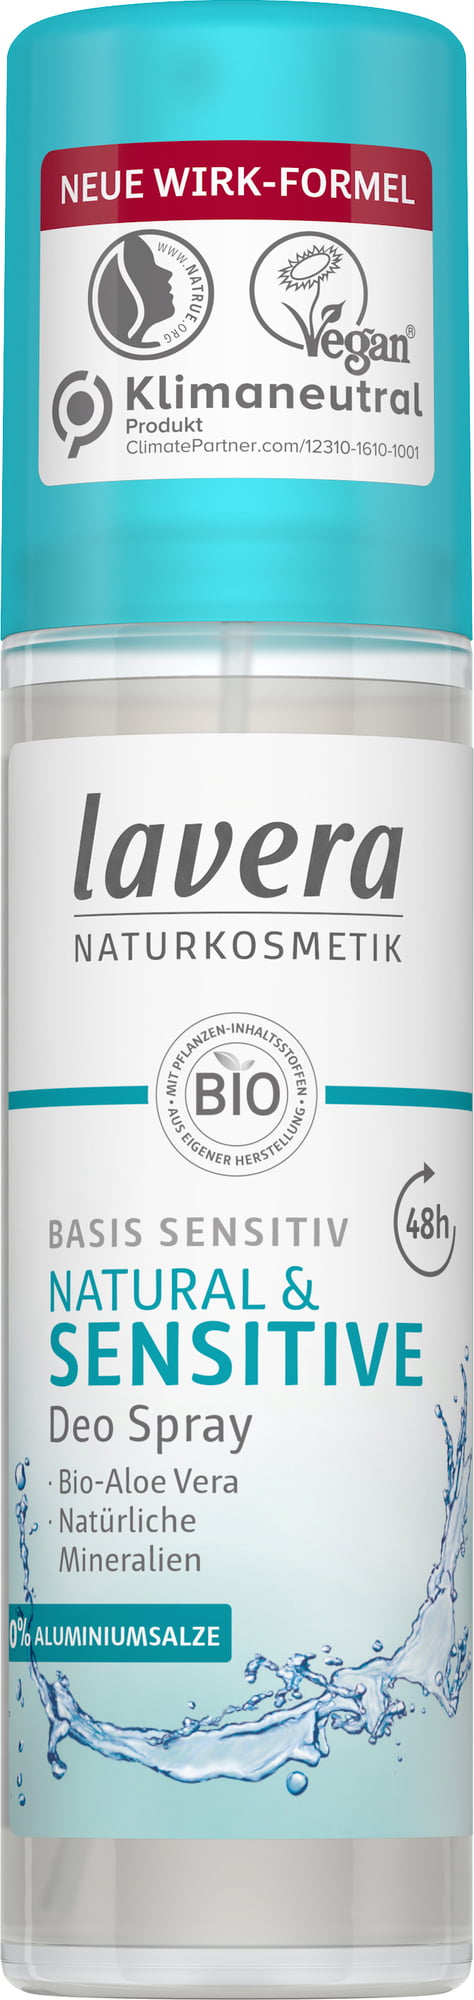 Lavera base sensitive natural & sensitive deodorant spray, 75ml - firstorganicbaby